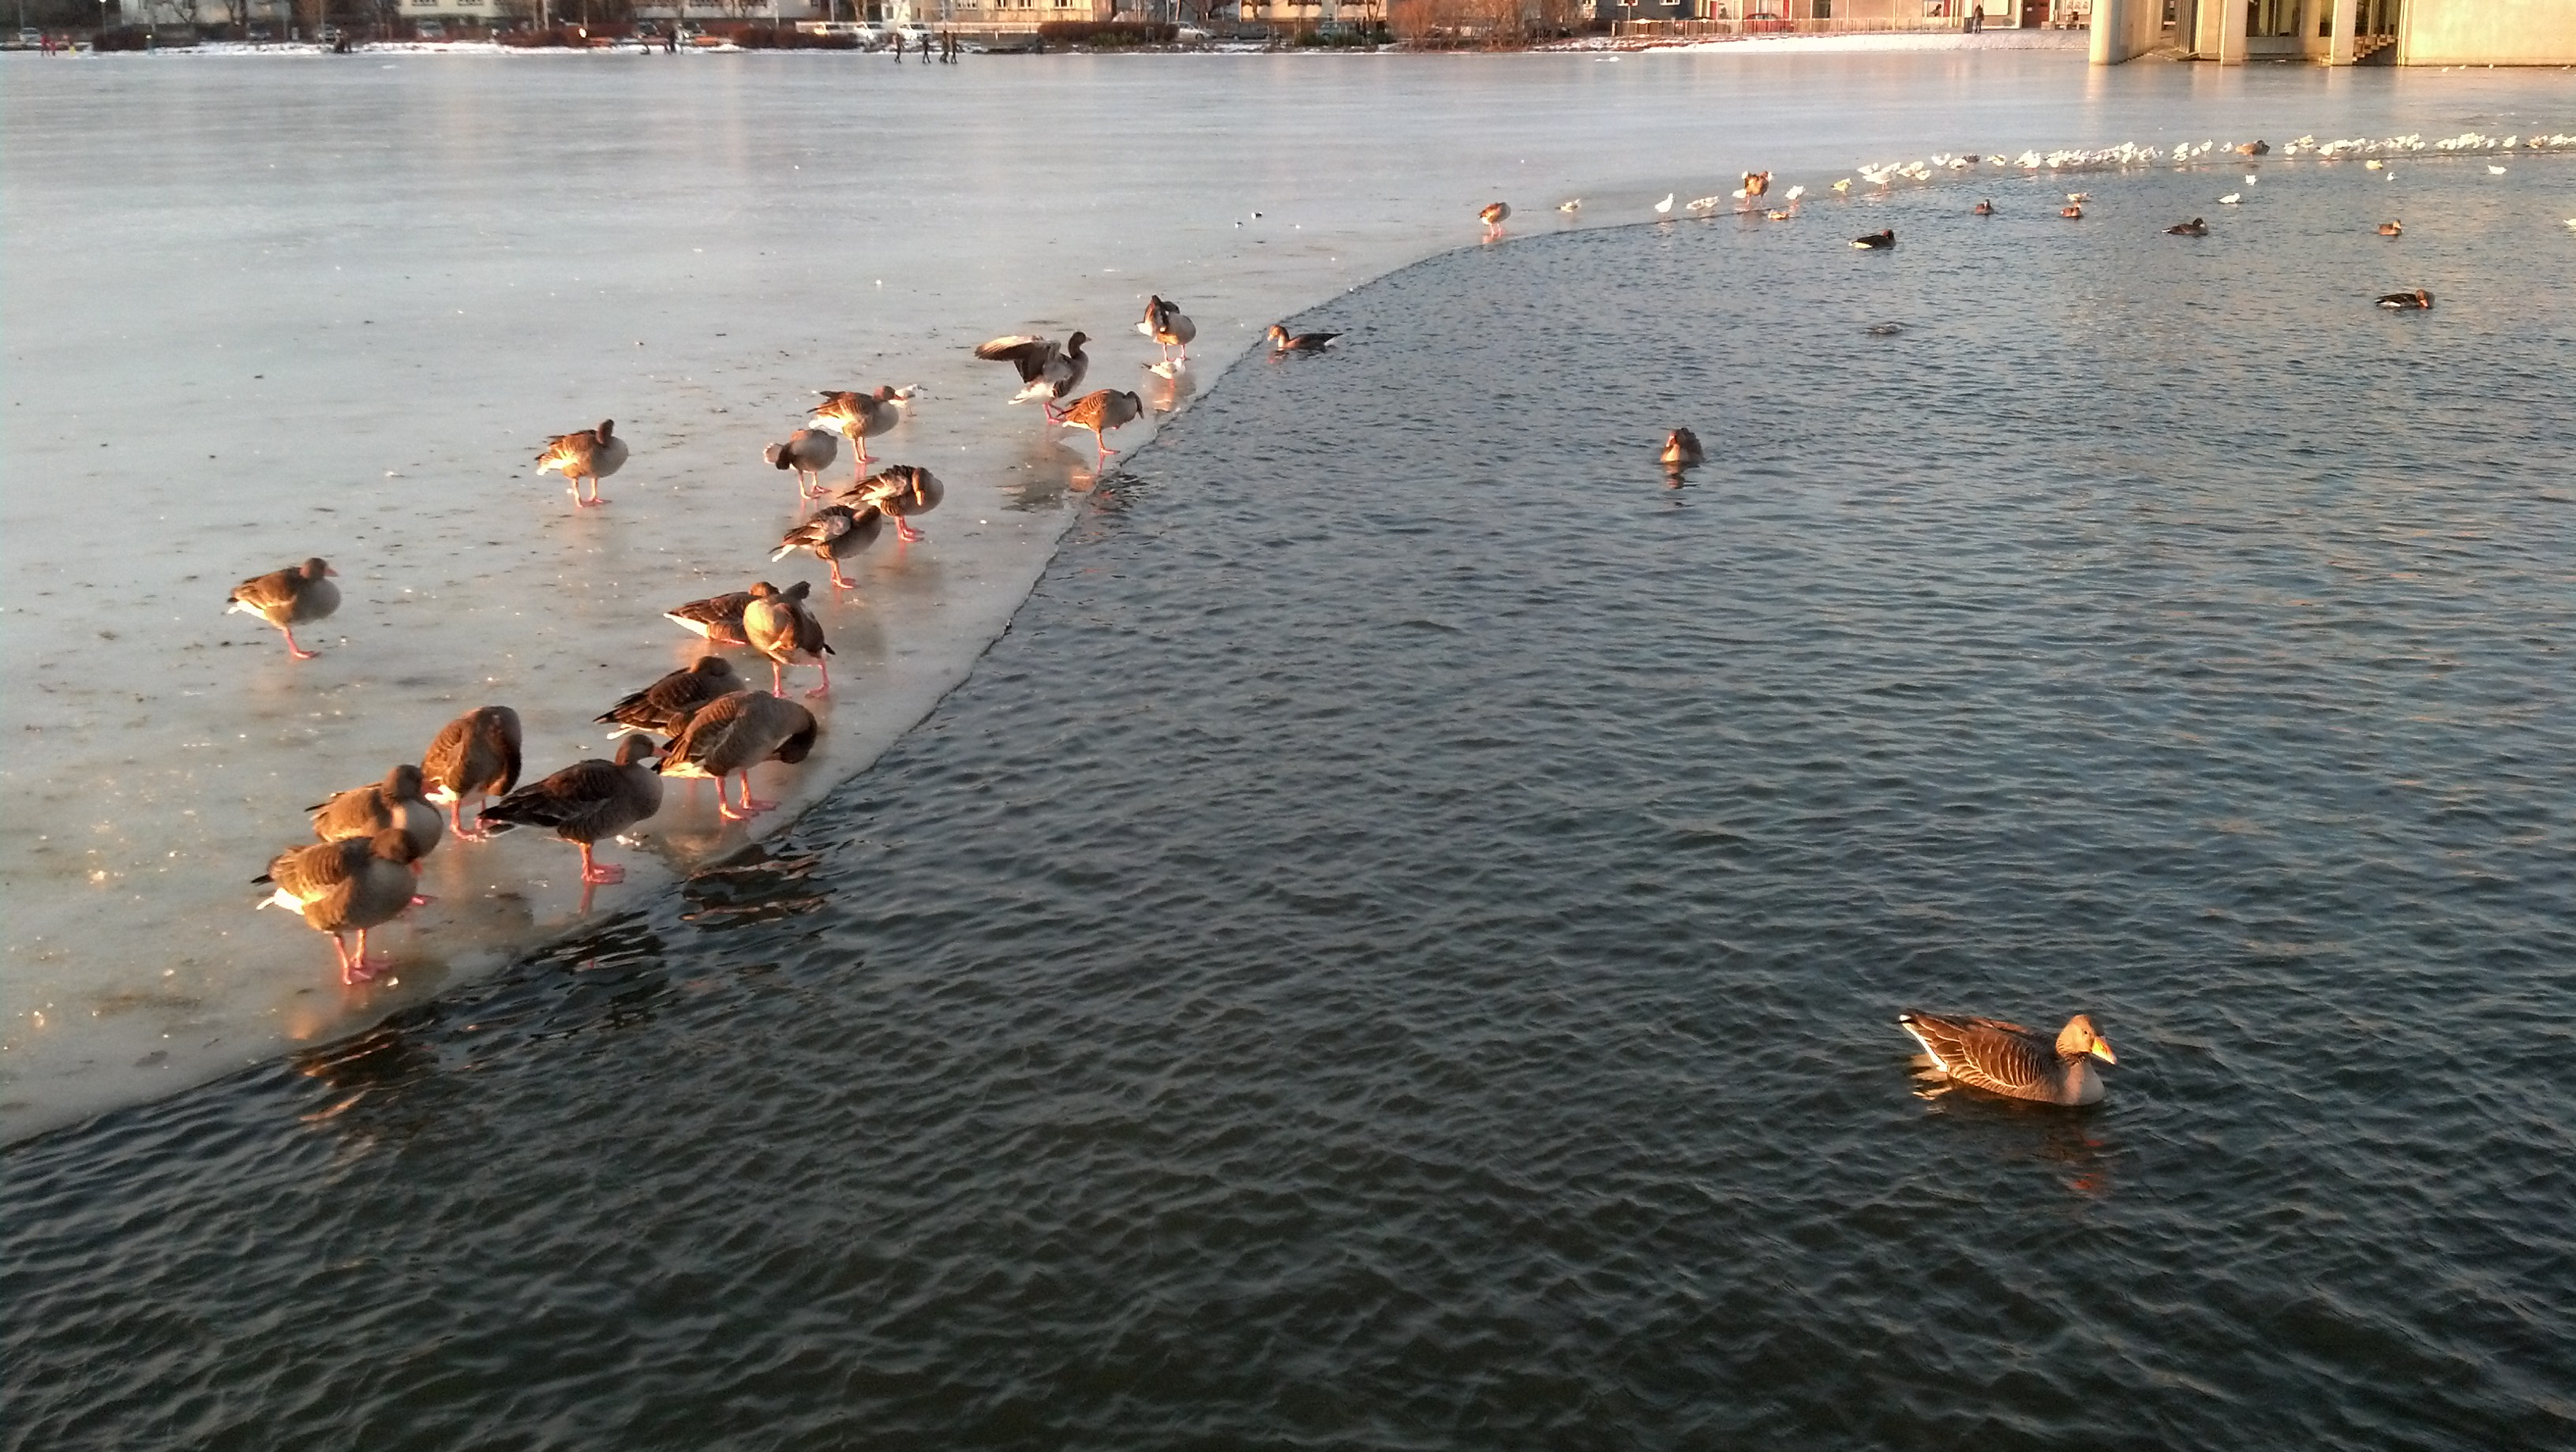 File:Ducks on a frozen pond, Reykjavik, Iceland.jpg - Wikimedia Commons